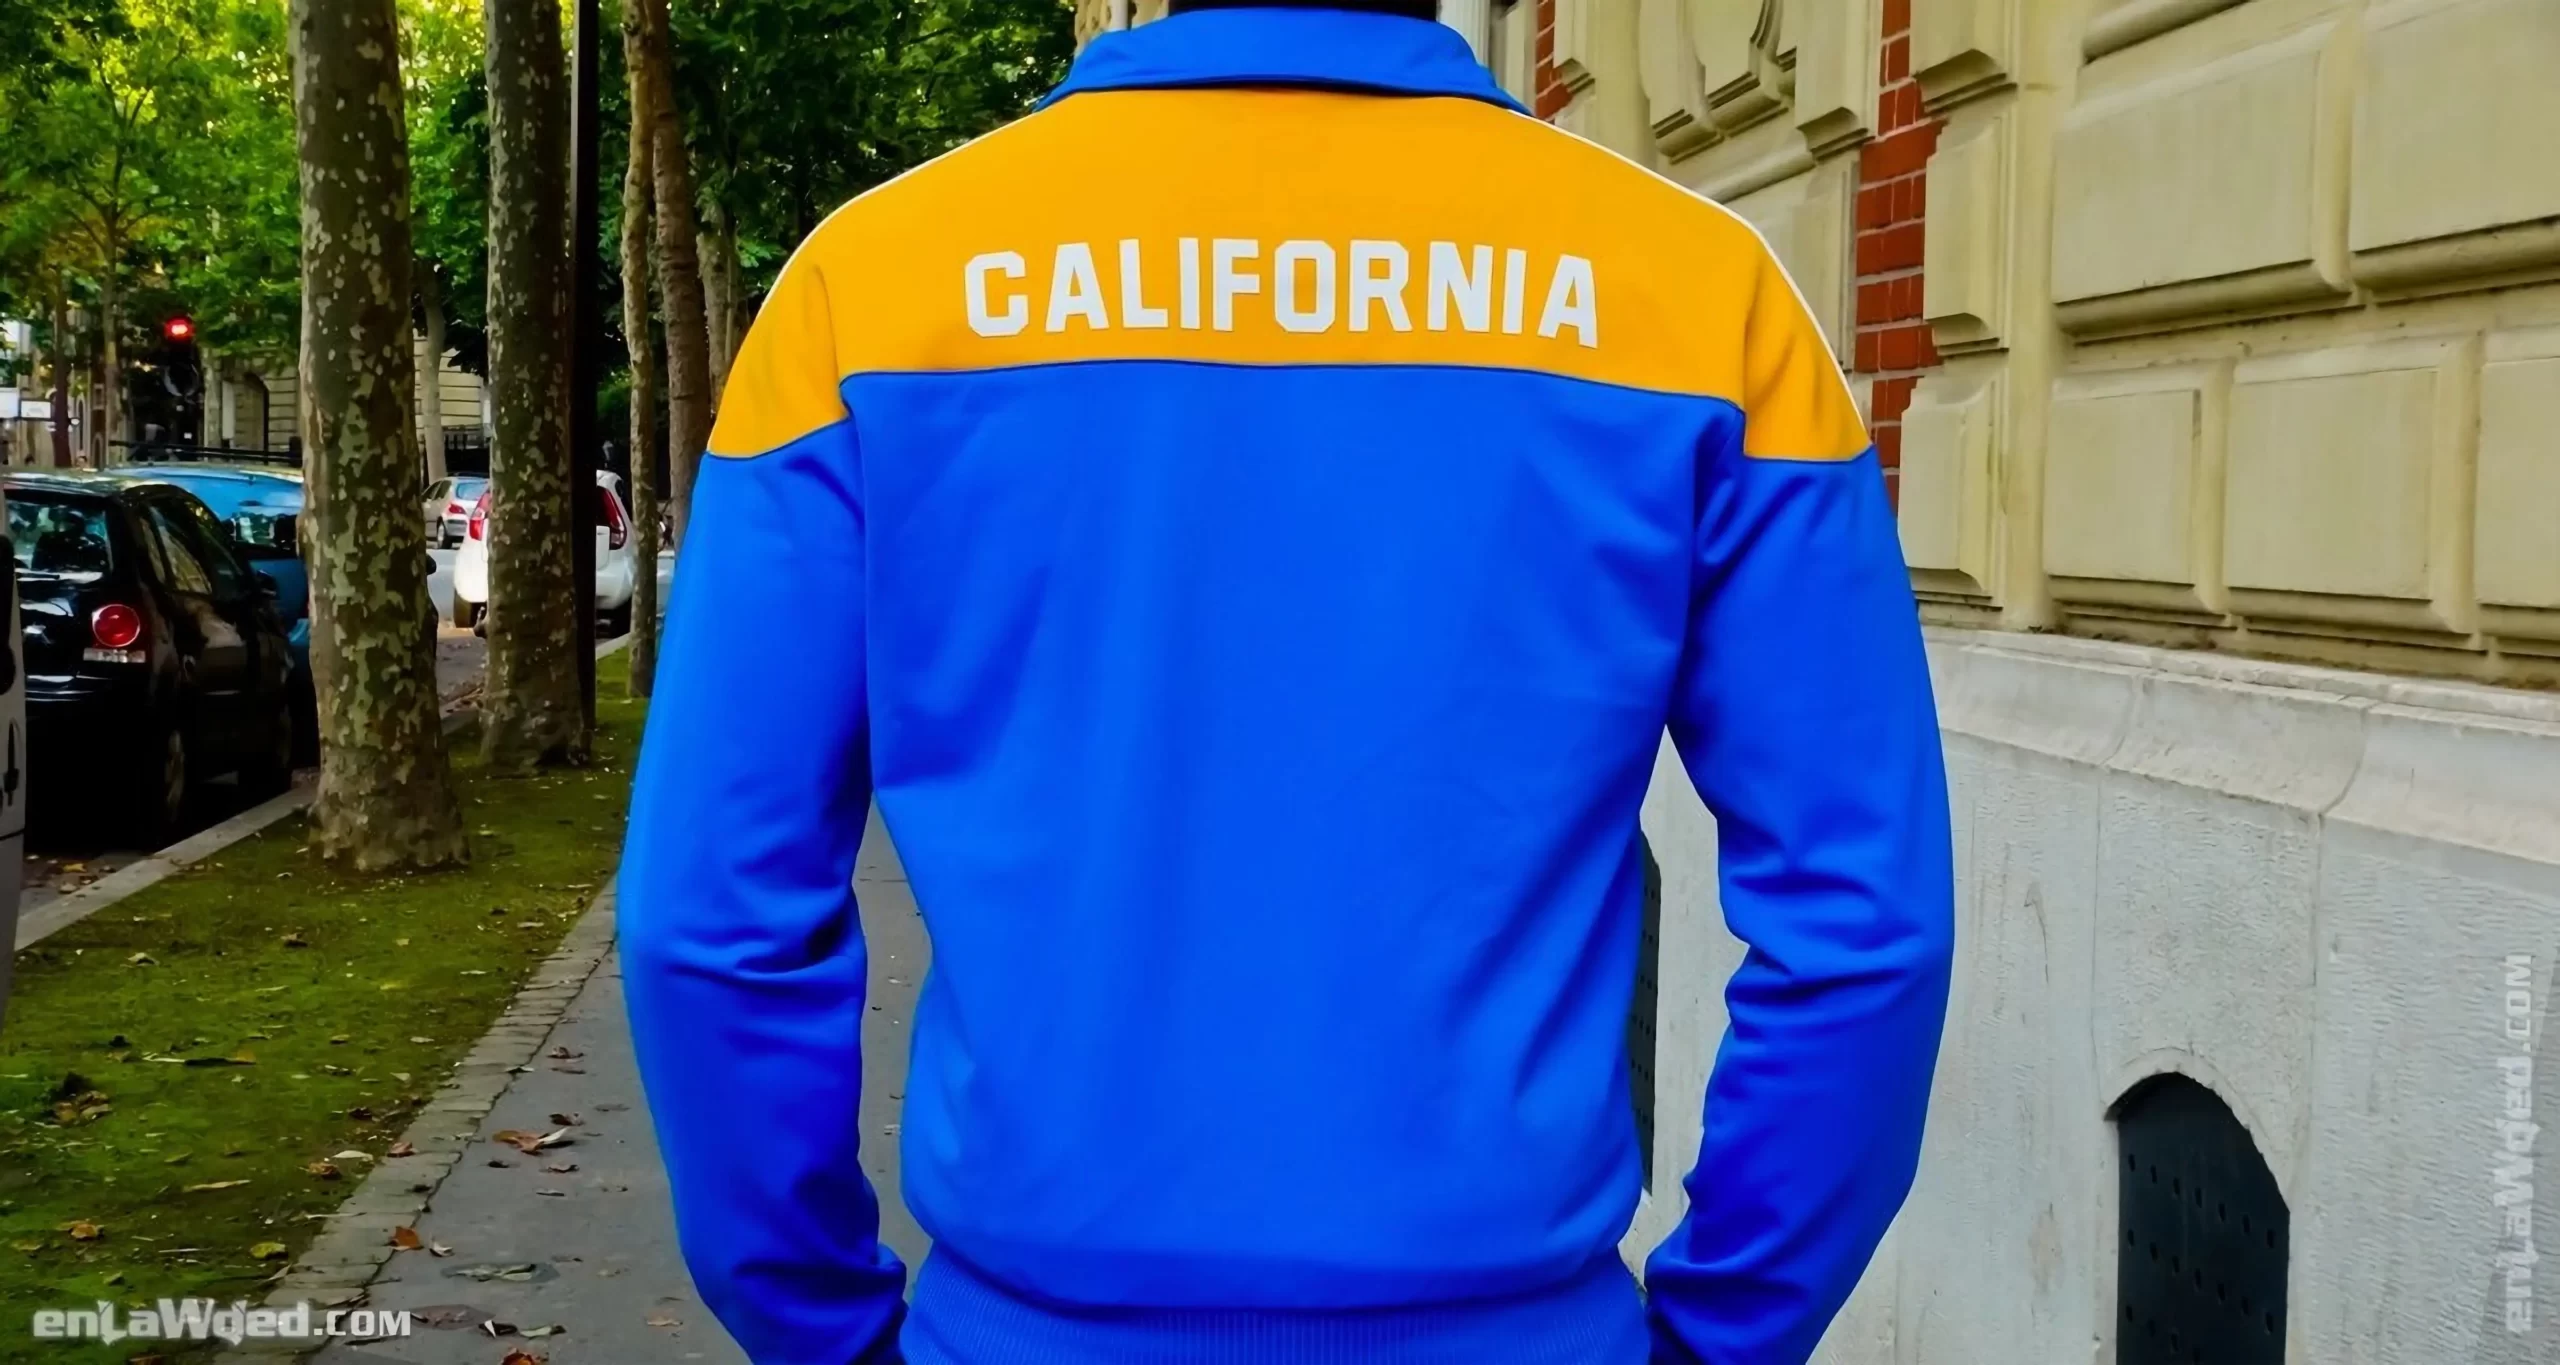 Men’s 2005 California State TT by Adidas Originals: Simplistic (EnLawded.com file #lmchk90624ip2y124515kg9st)